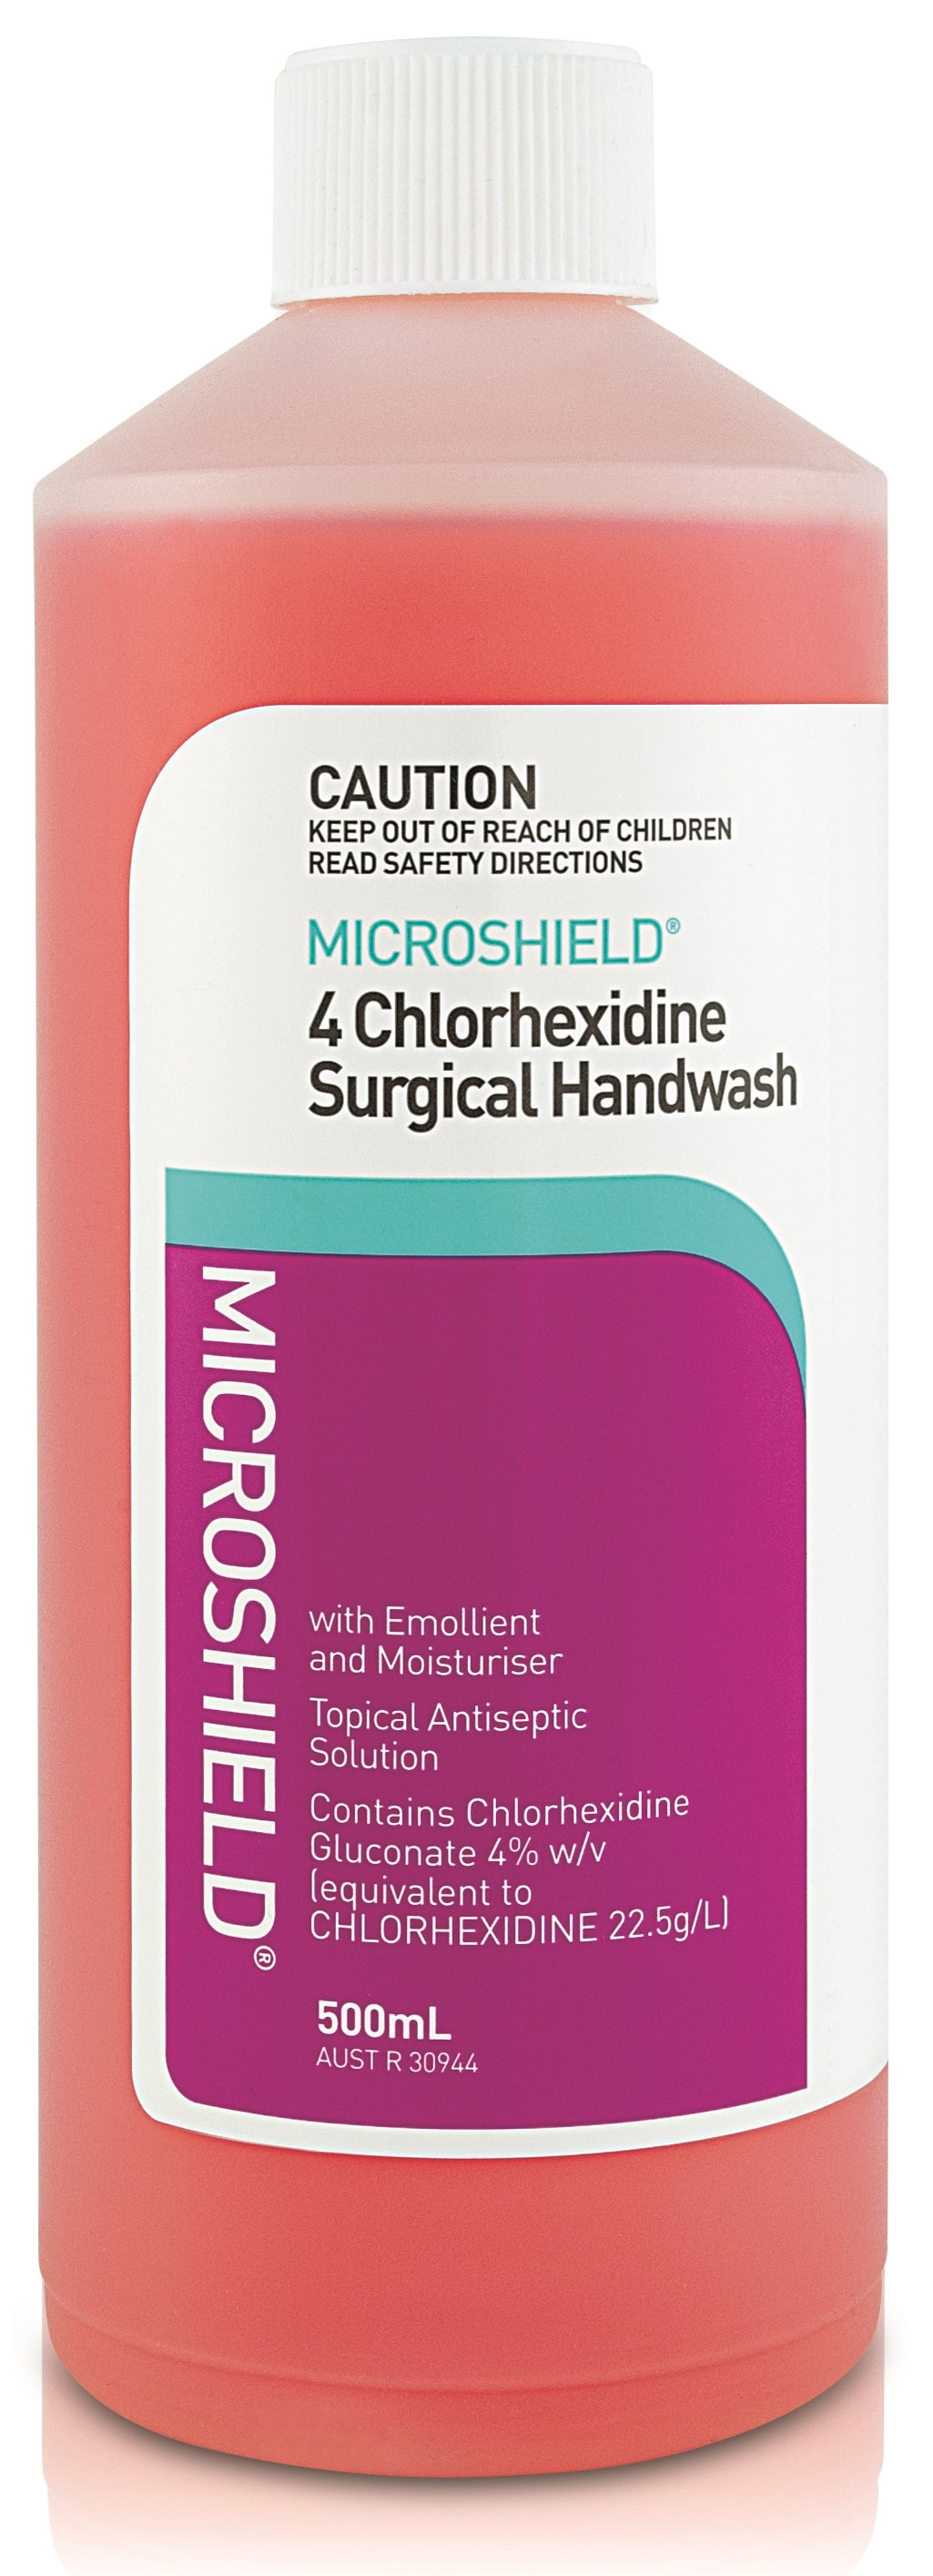 Microshield 4% Chlorhexidine Surgical Handwash 500ml image 0